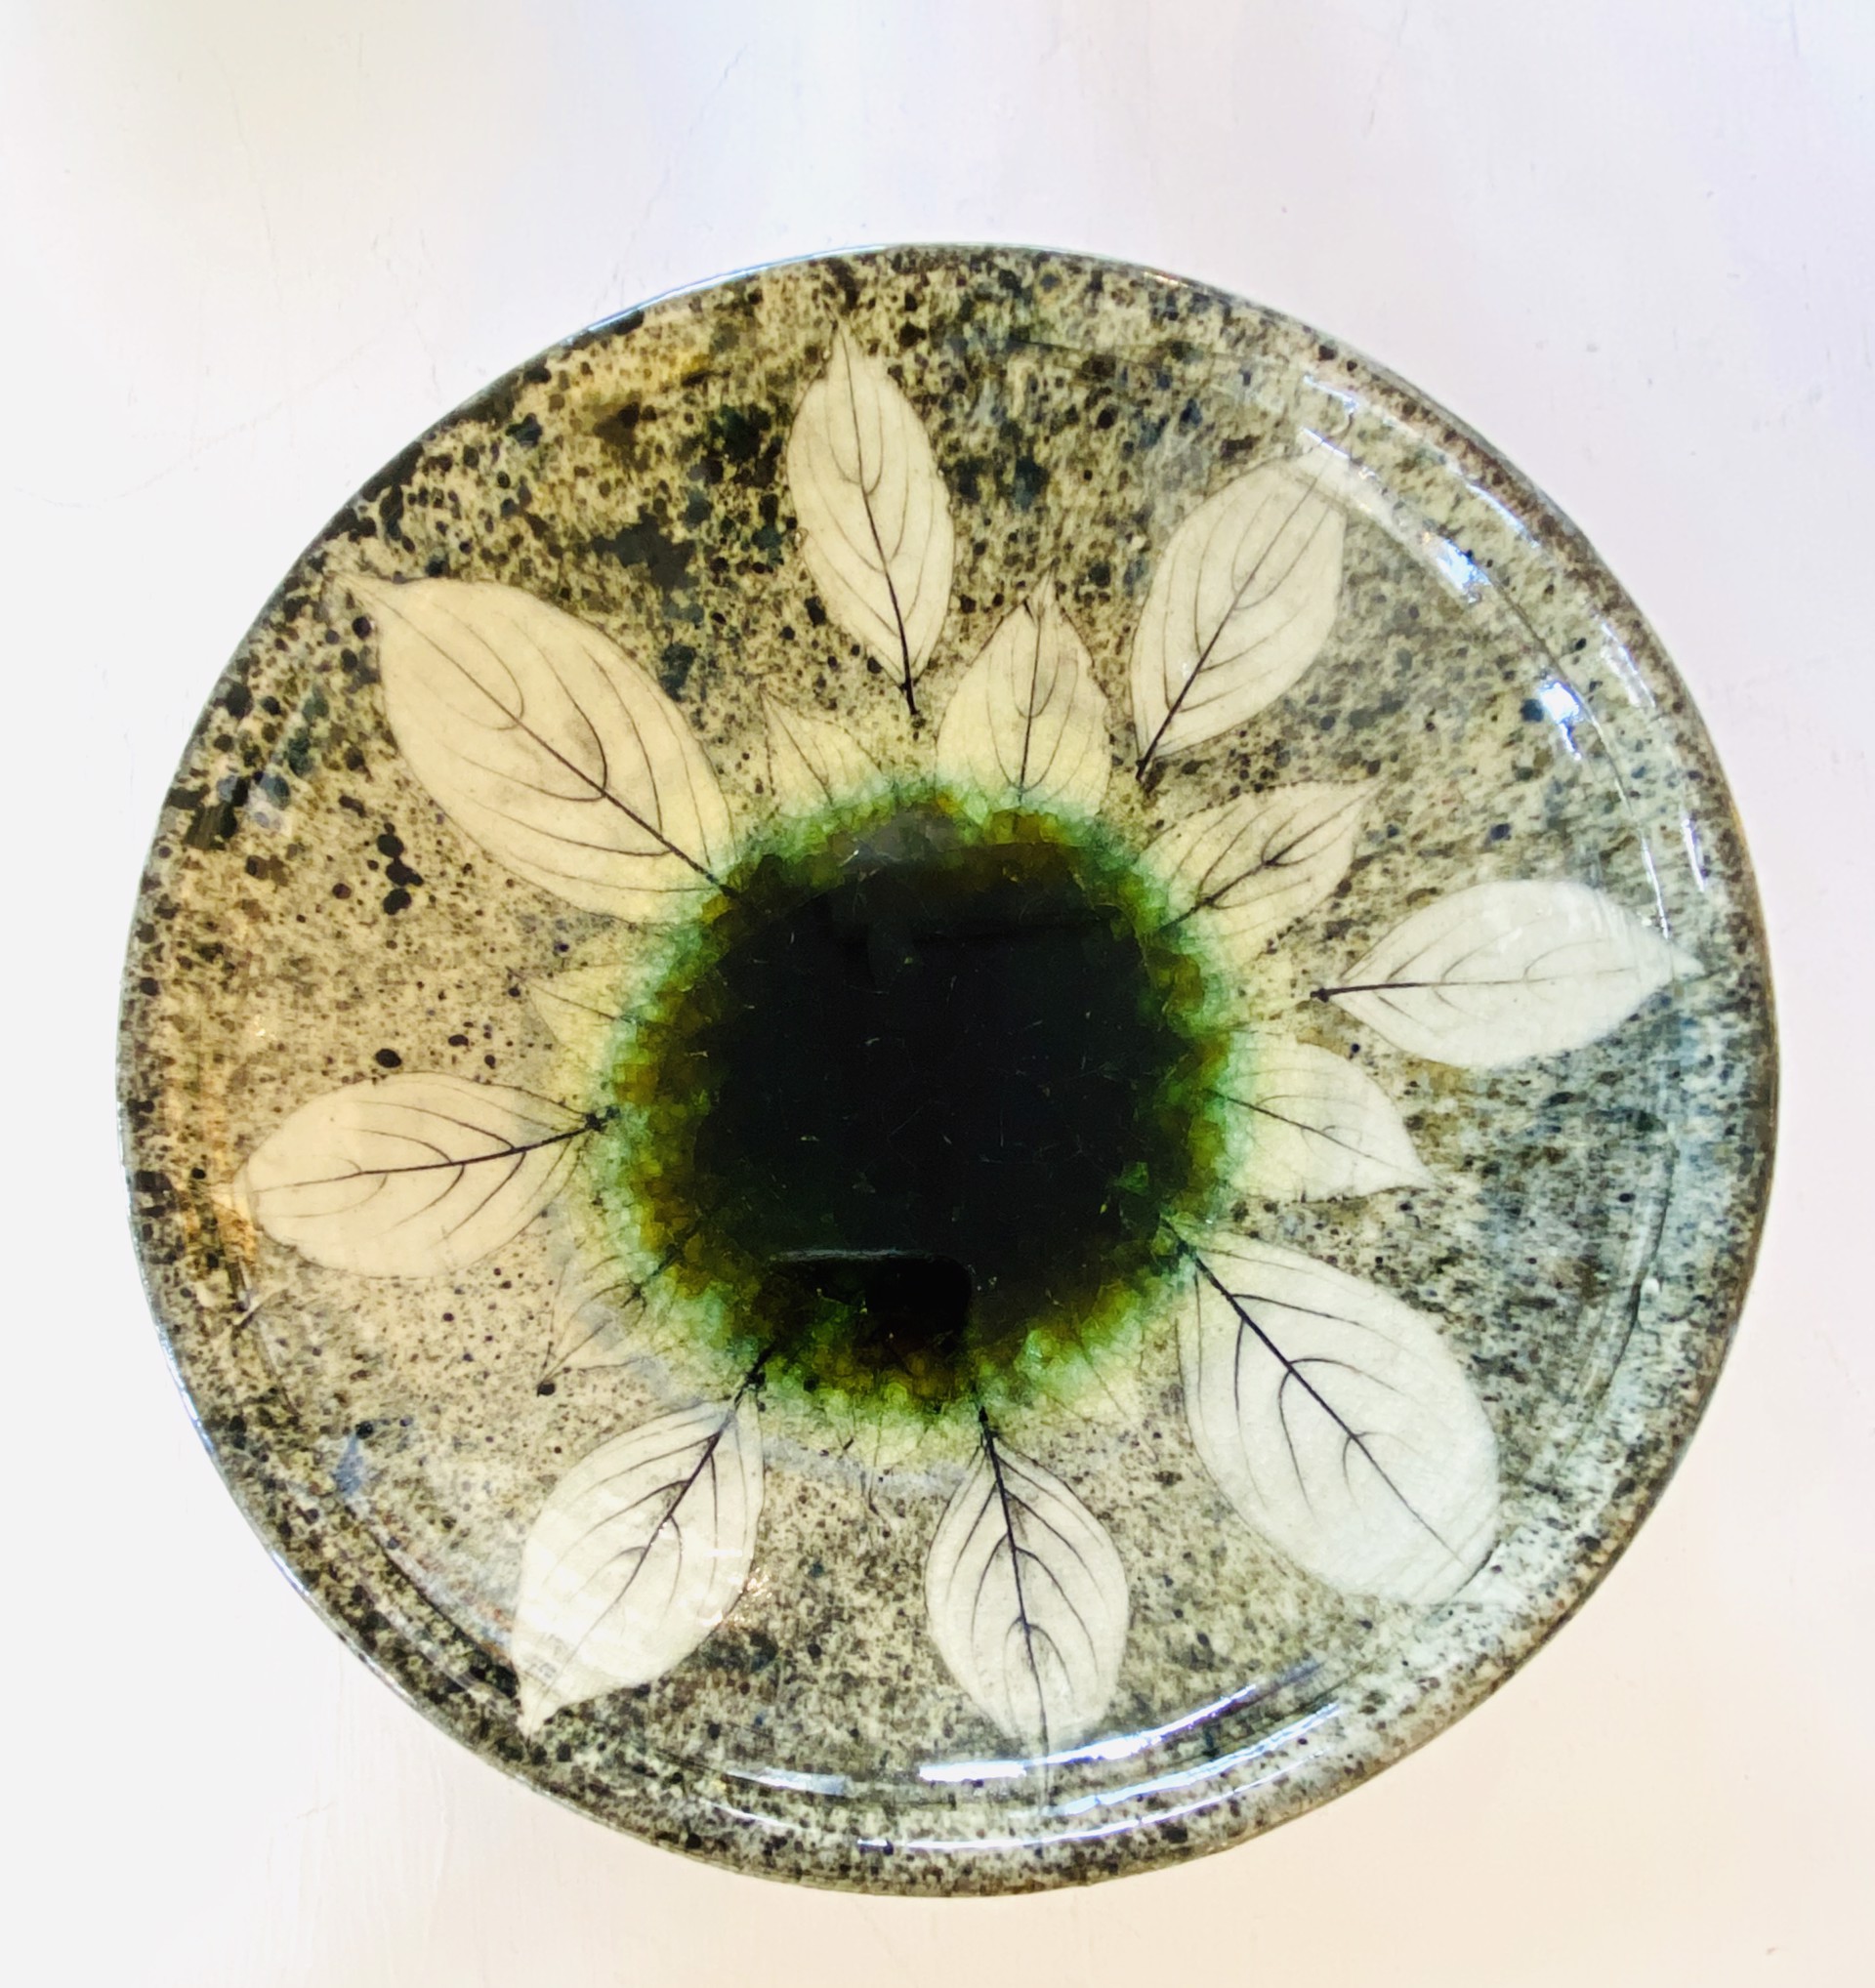 "Pool" leaf bowl with glass cystals #3 by Angel Allen